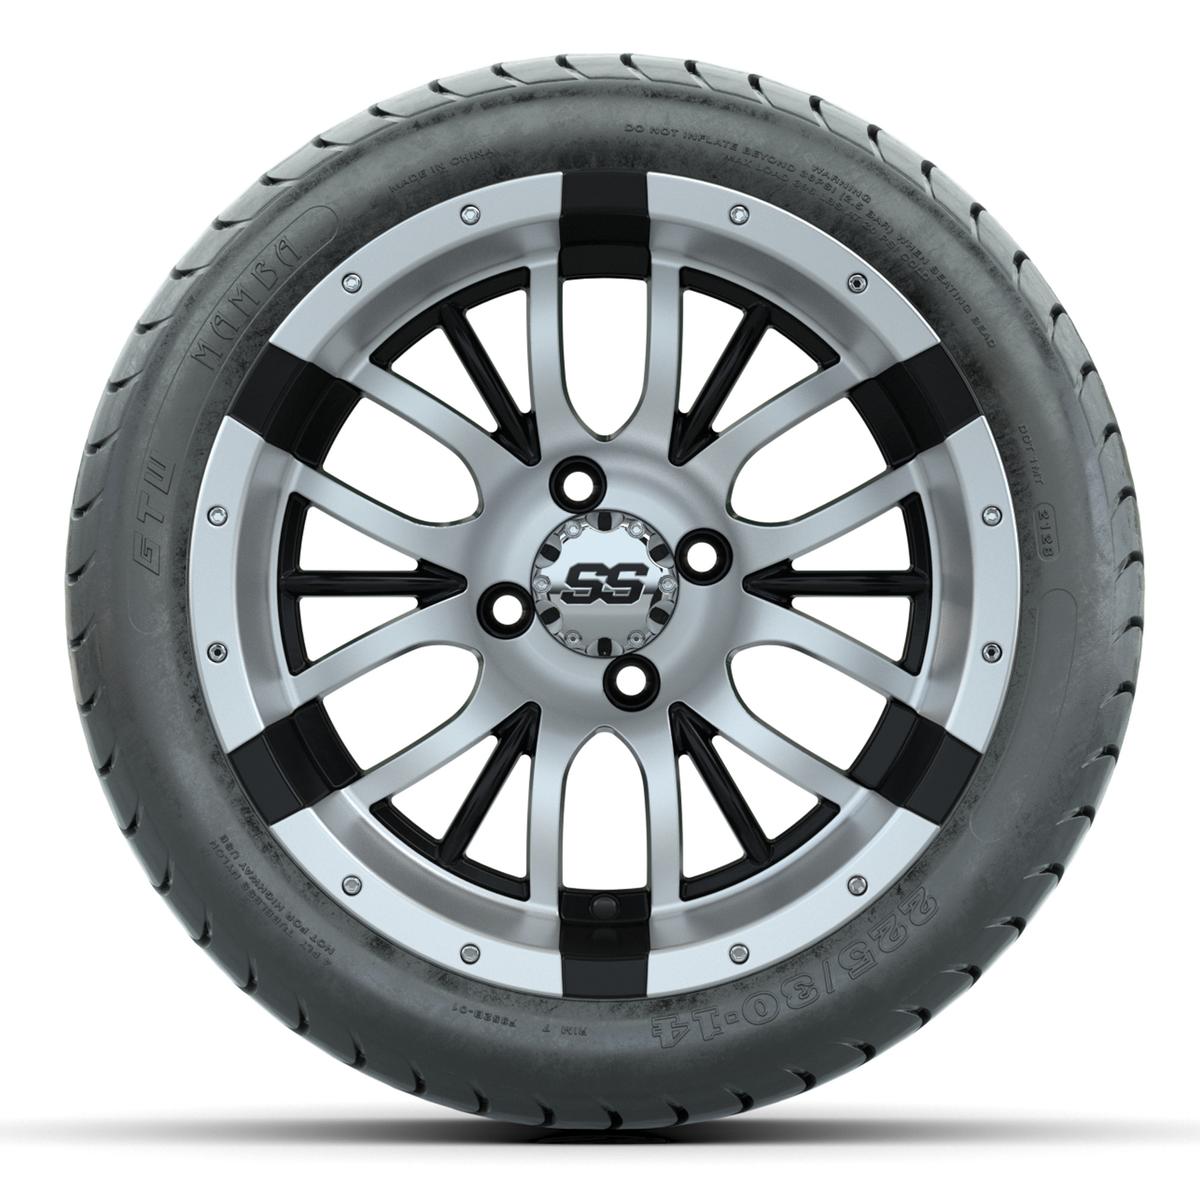 Set of (4) 14 in GTW Diesel Wheels with 225/30-14 Mamba Street Tires